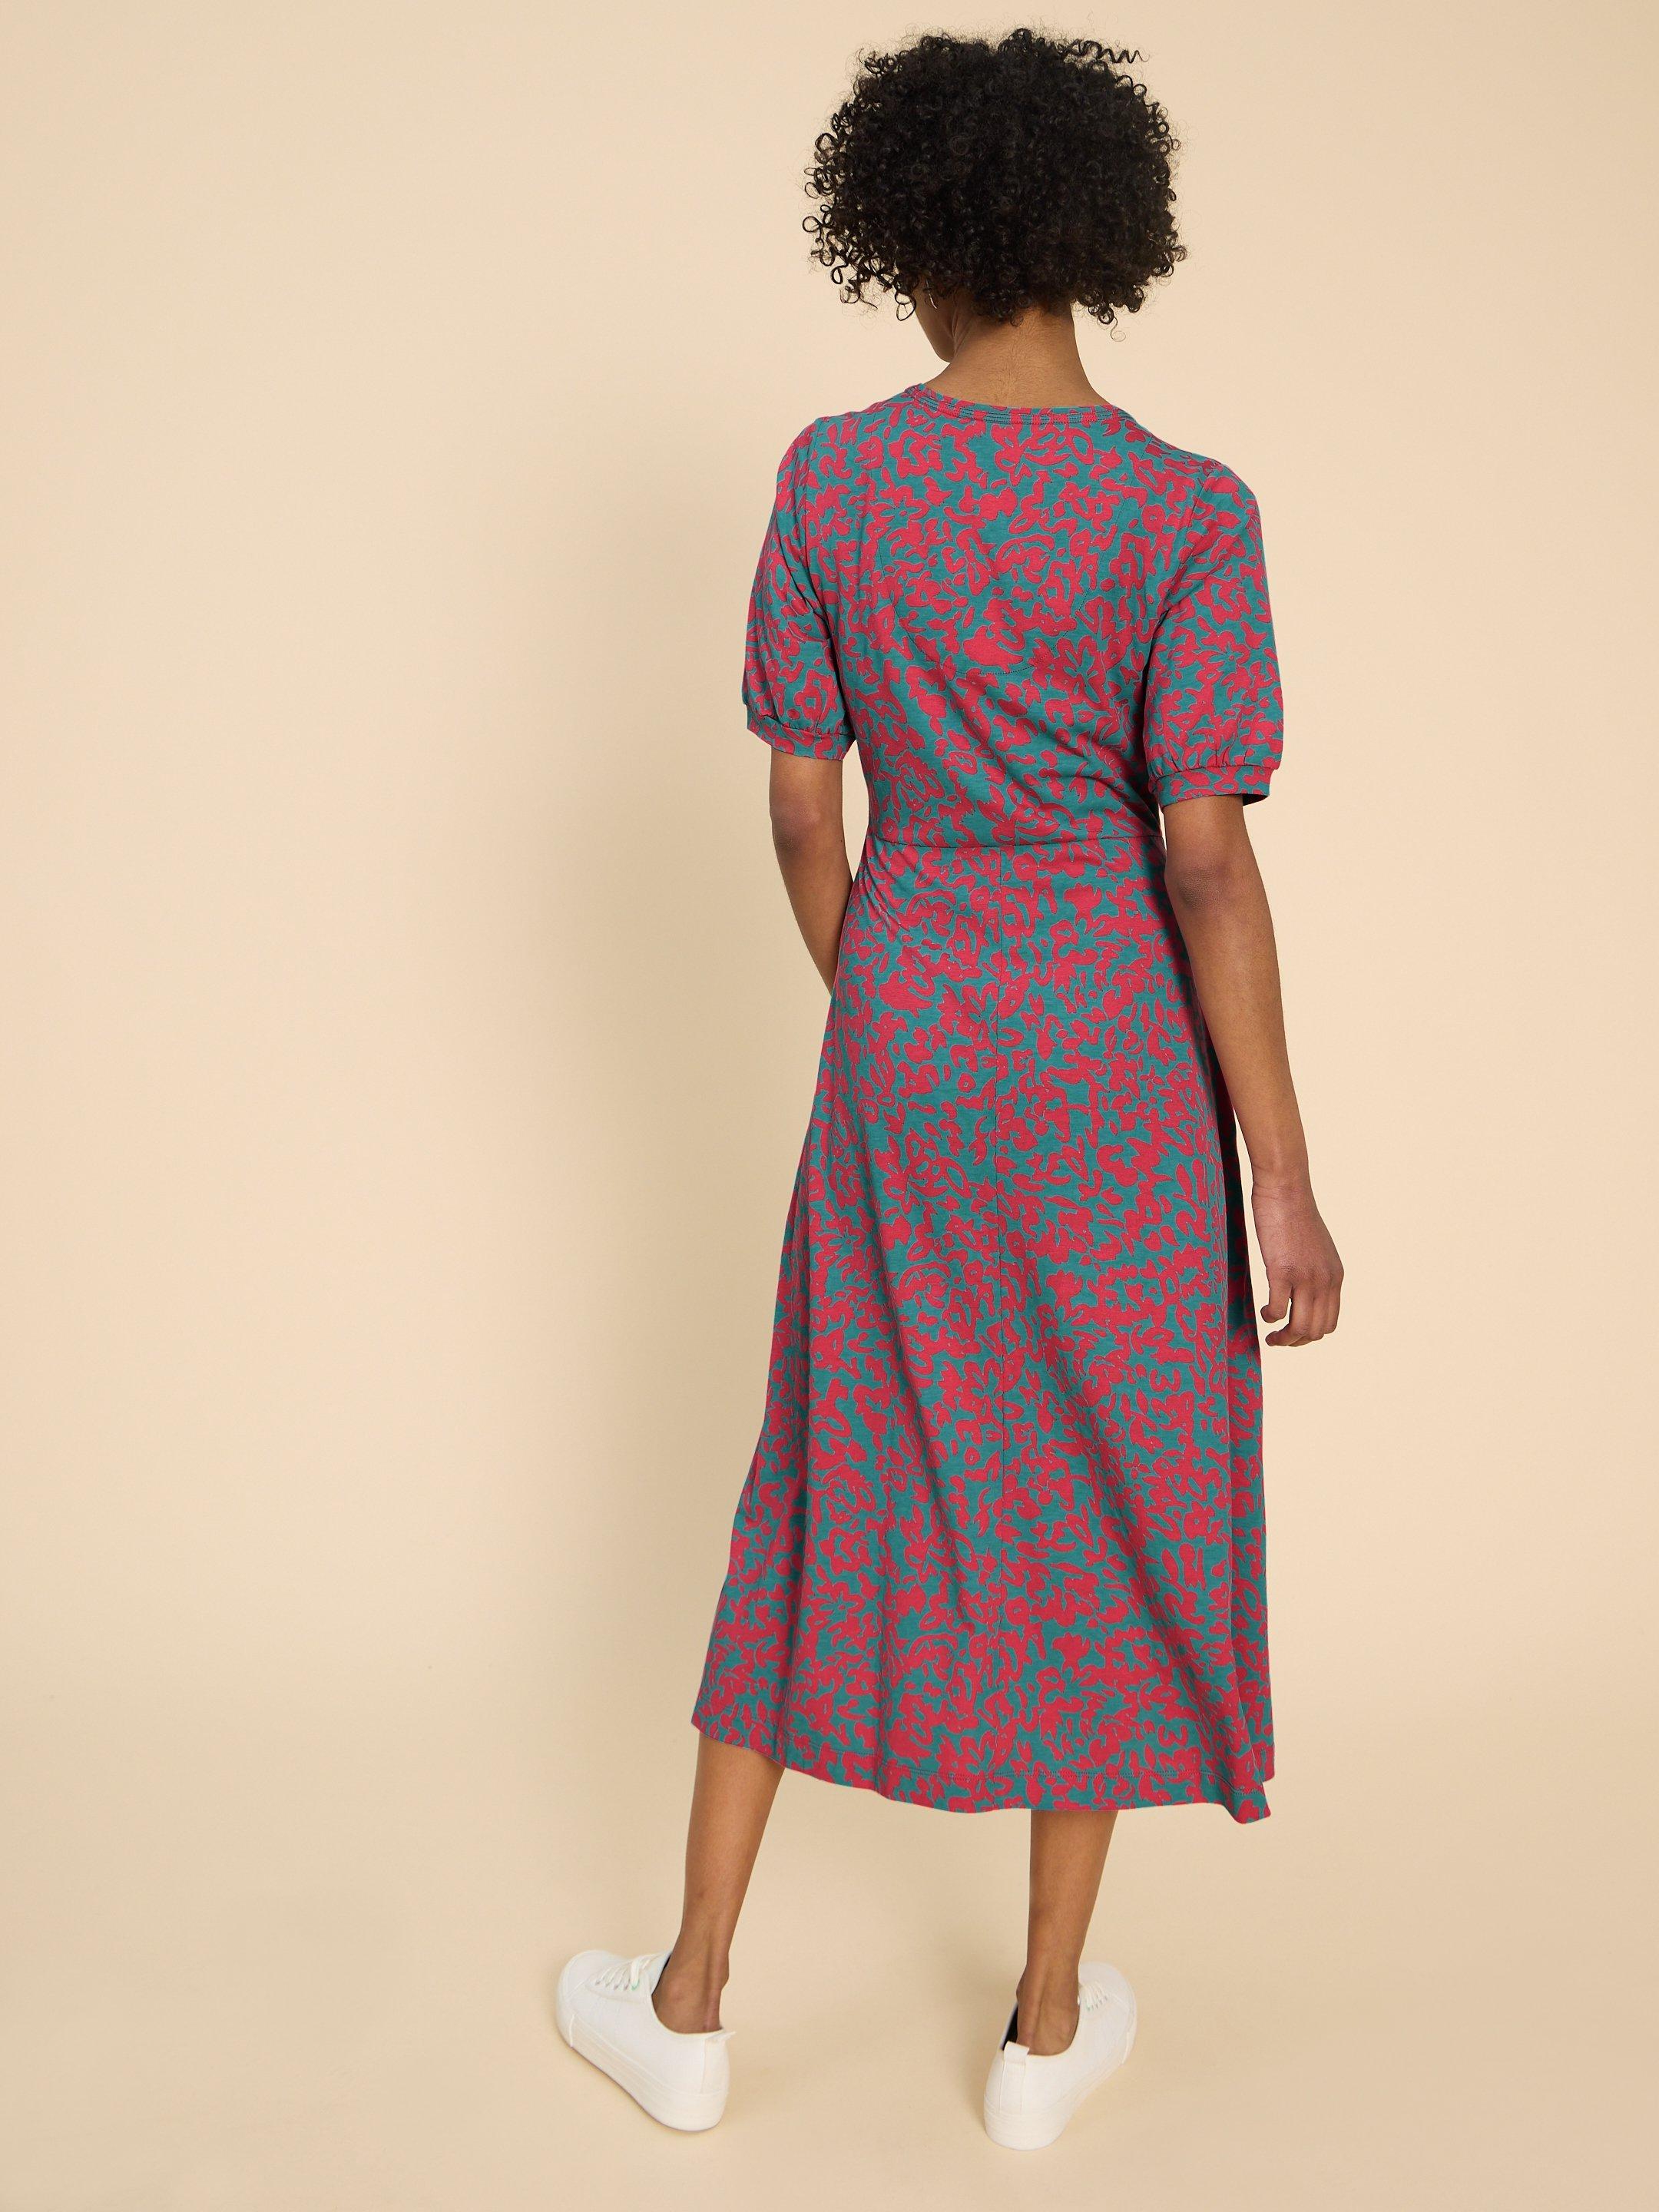 Megan Jersey Printed Dress in PINK PR - MODEL BACK